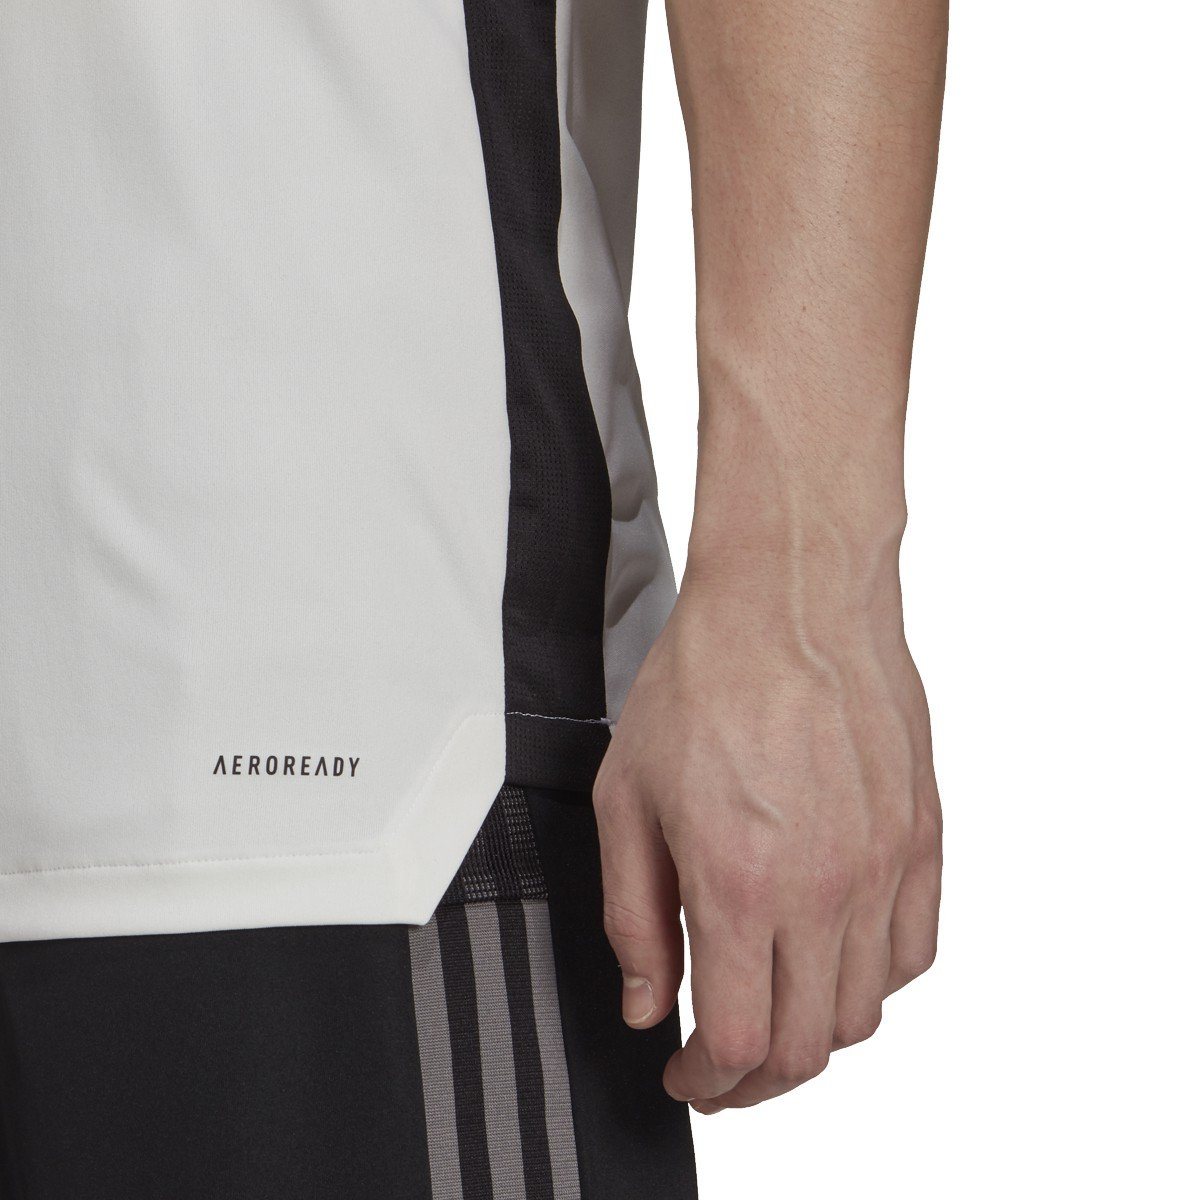 adidas Men's Juventus Training Jersey | GR2937 Apparel Adidas 